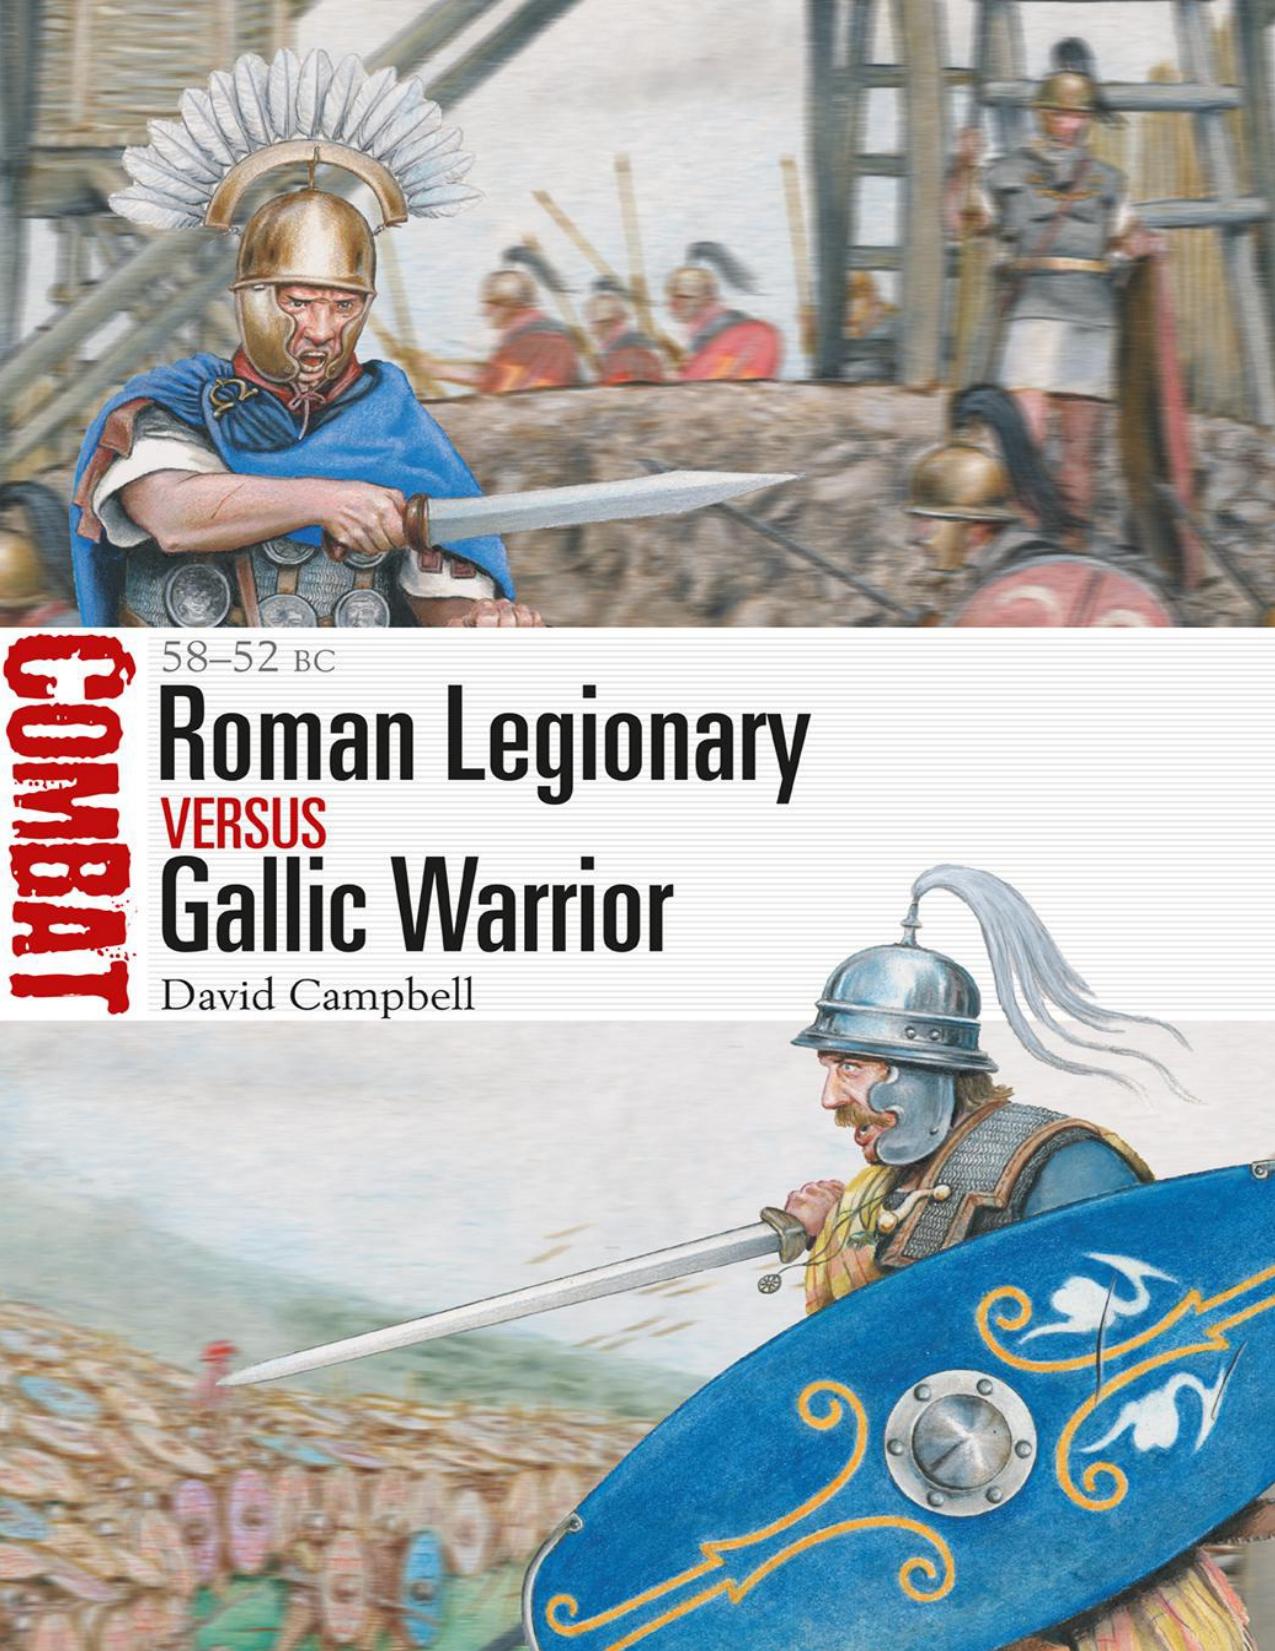 Roman Legionary Versus Gallic Warrior by David Campbell & Raffaele Ruggeri